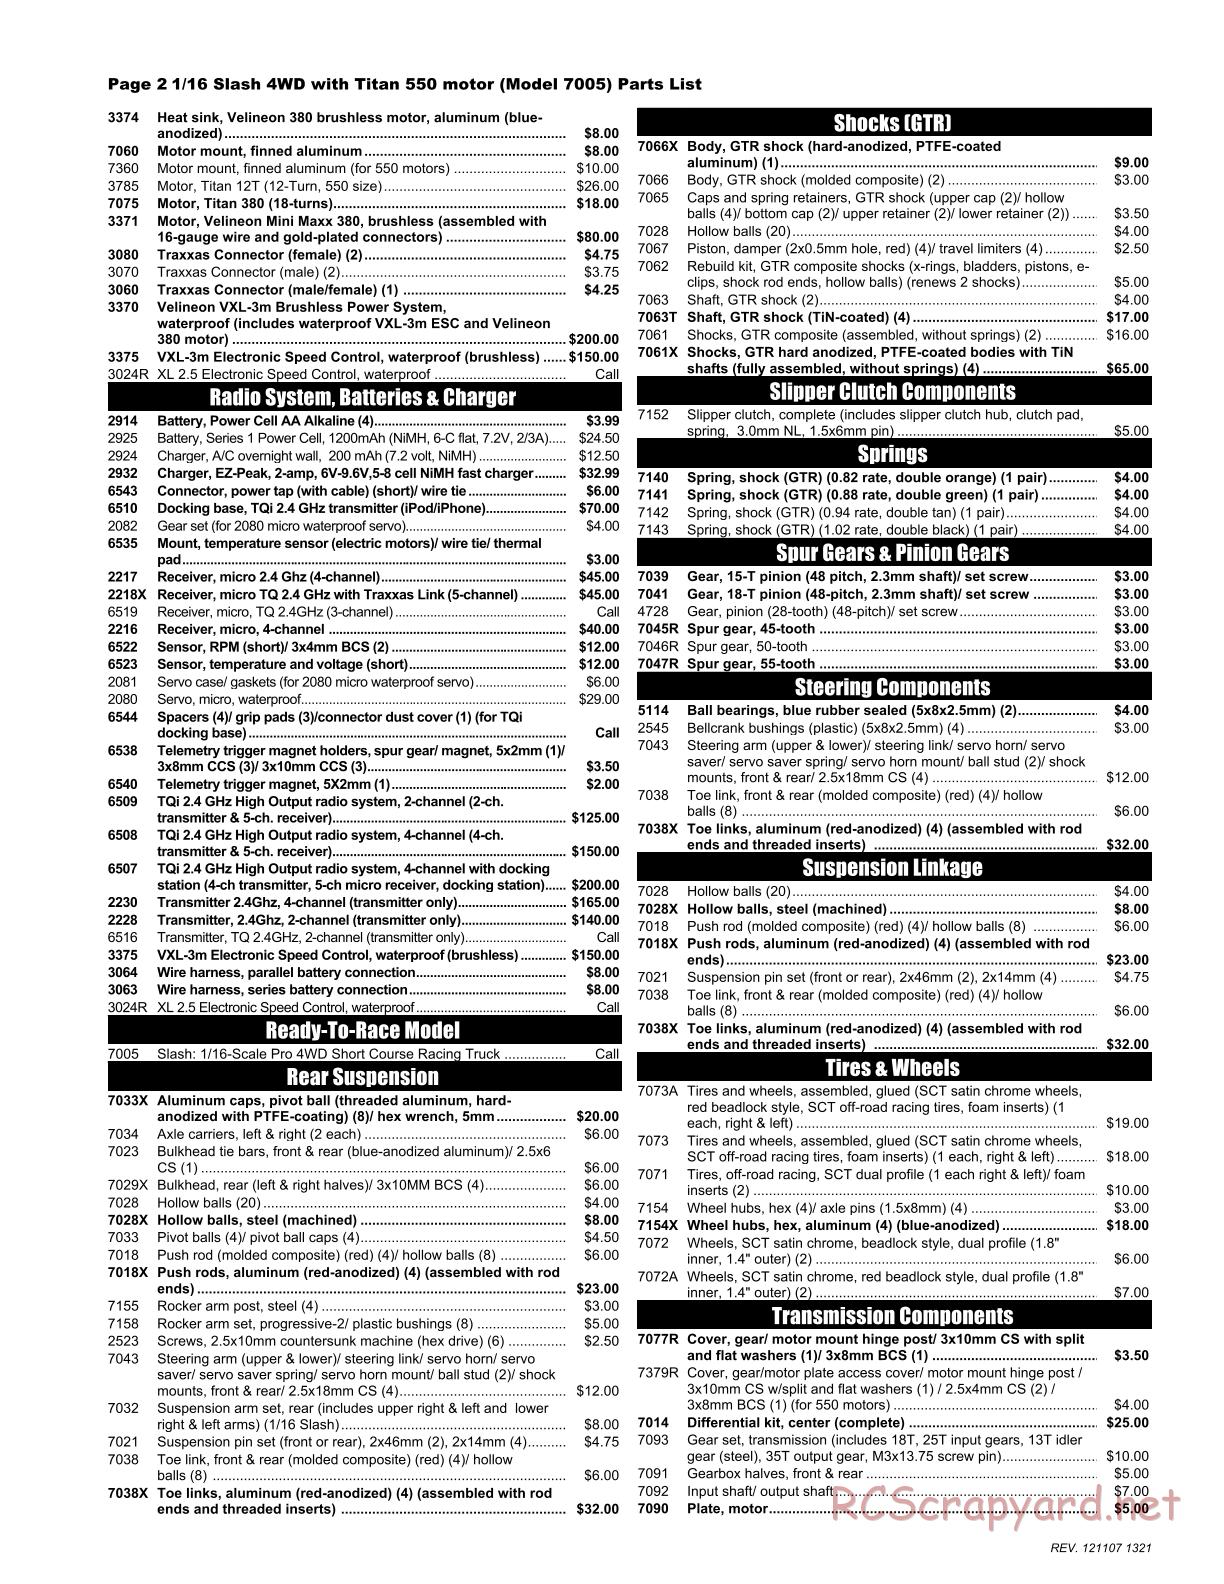 Traxxas - 1/16 Slash 4x4 Brushed (2013) - Parts List - Page 2